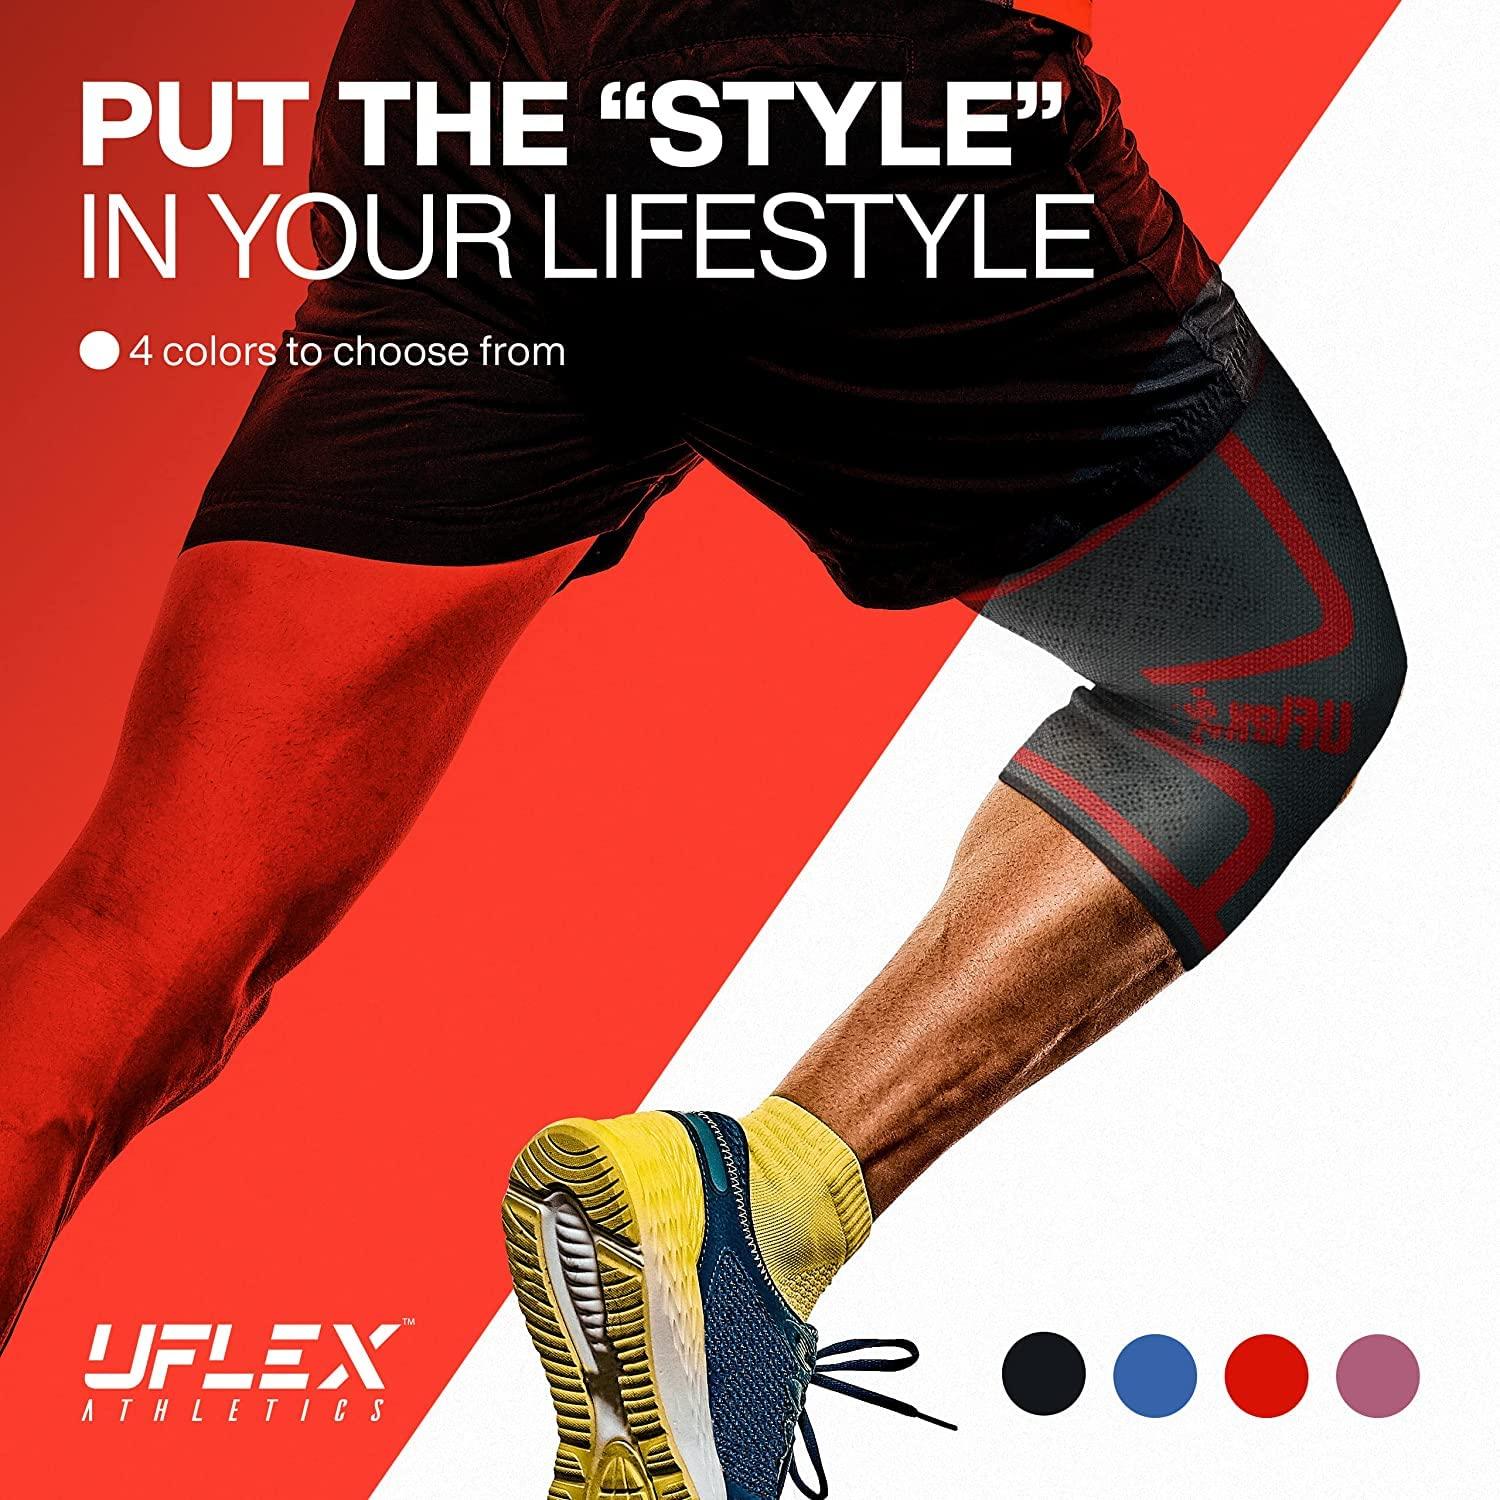 Uflex athletics compression knee sleeve